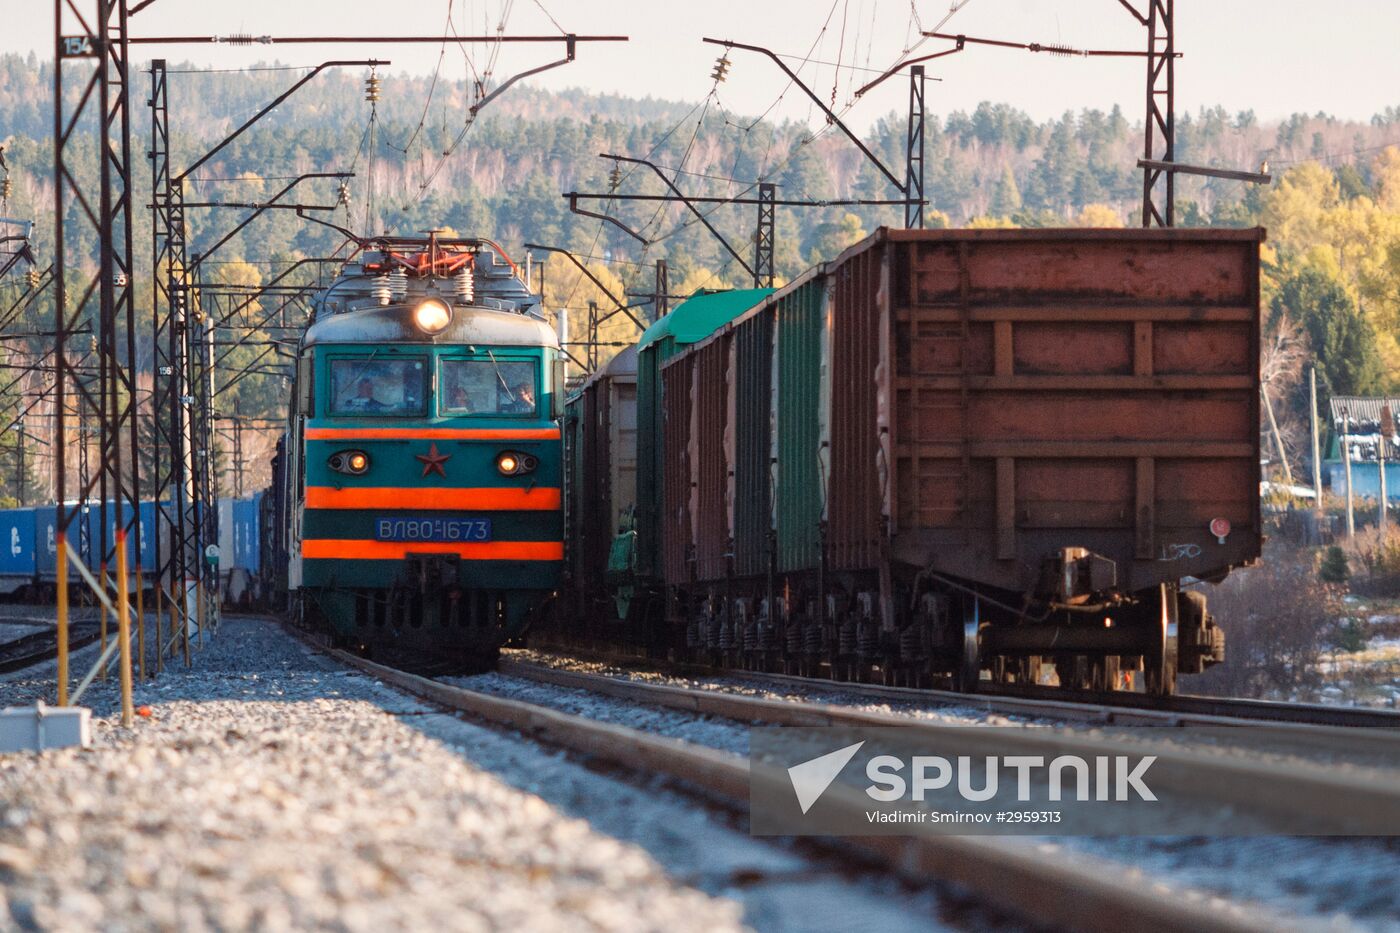 100th anniversary of the Trans-Siberian Railway